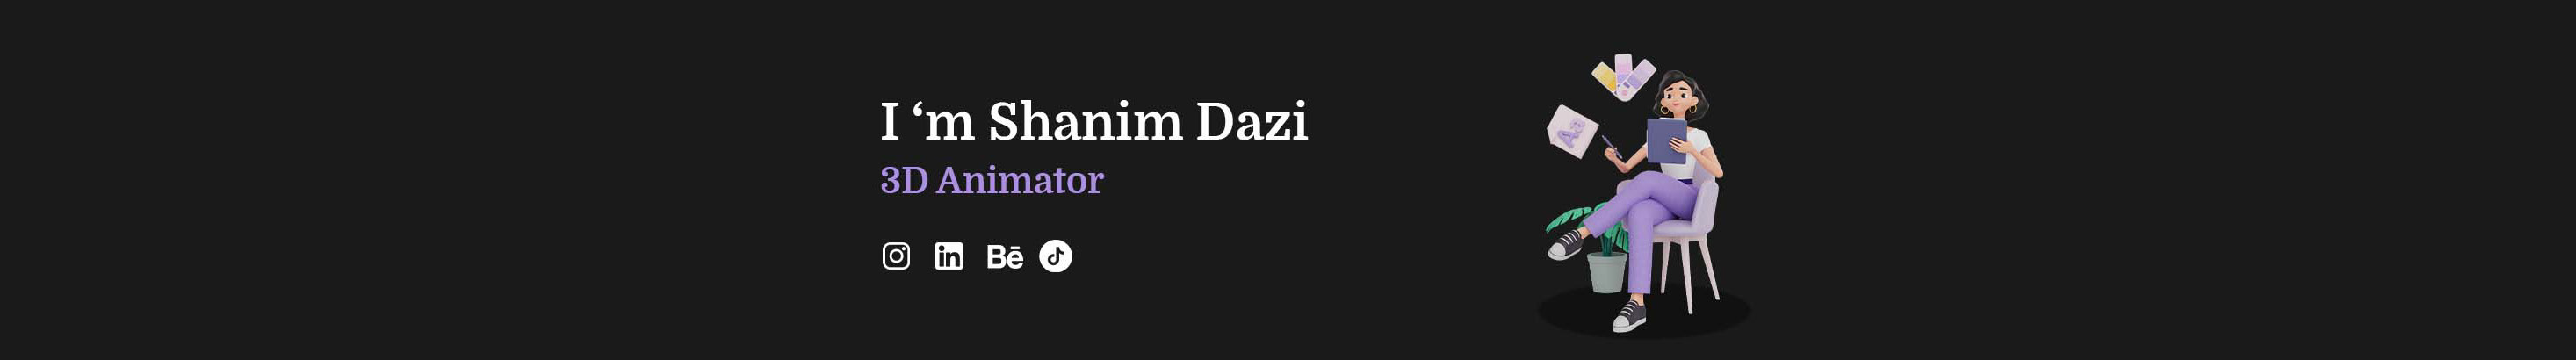 Shanim Dazis profilbanner